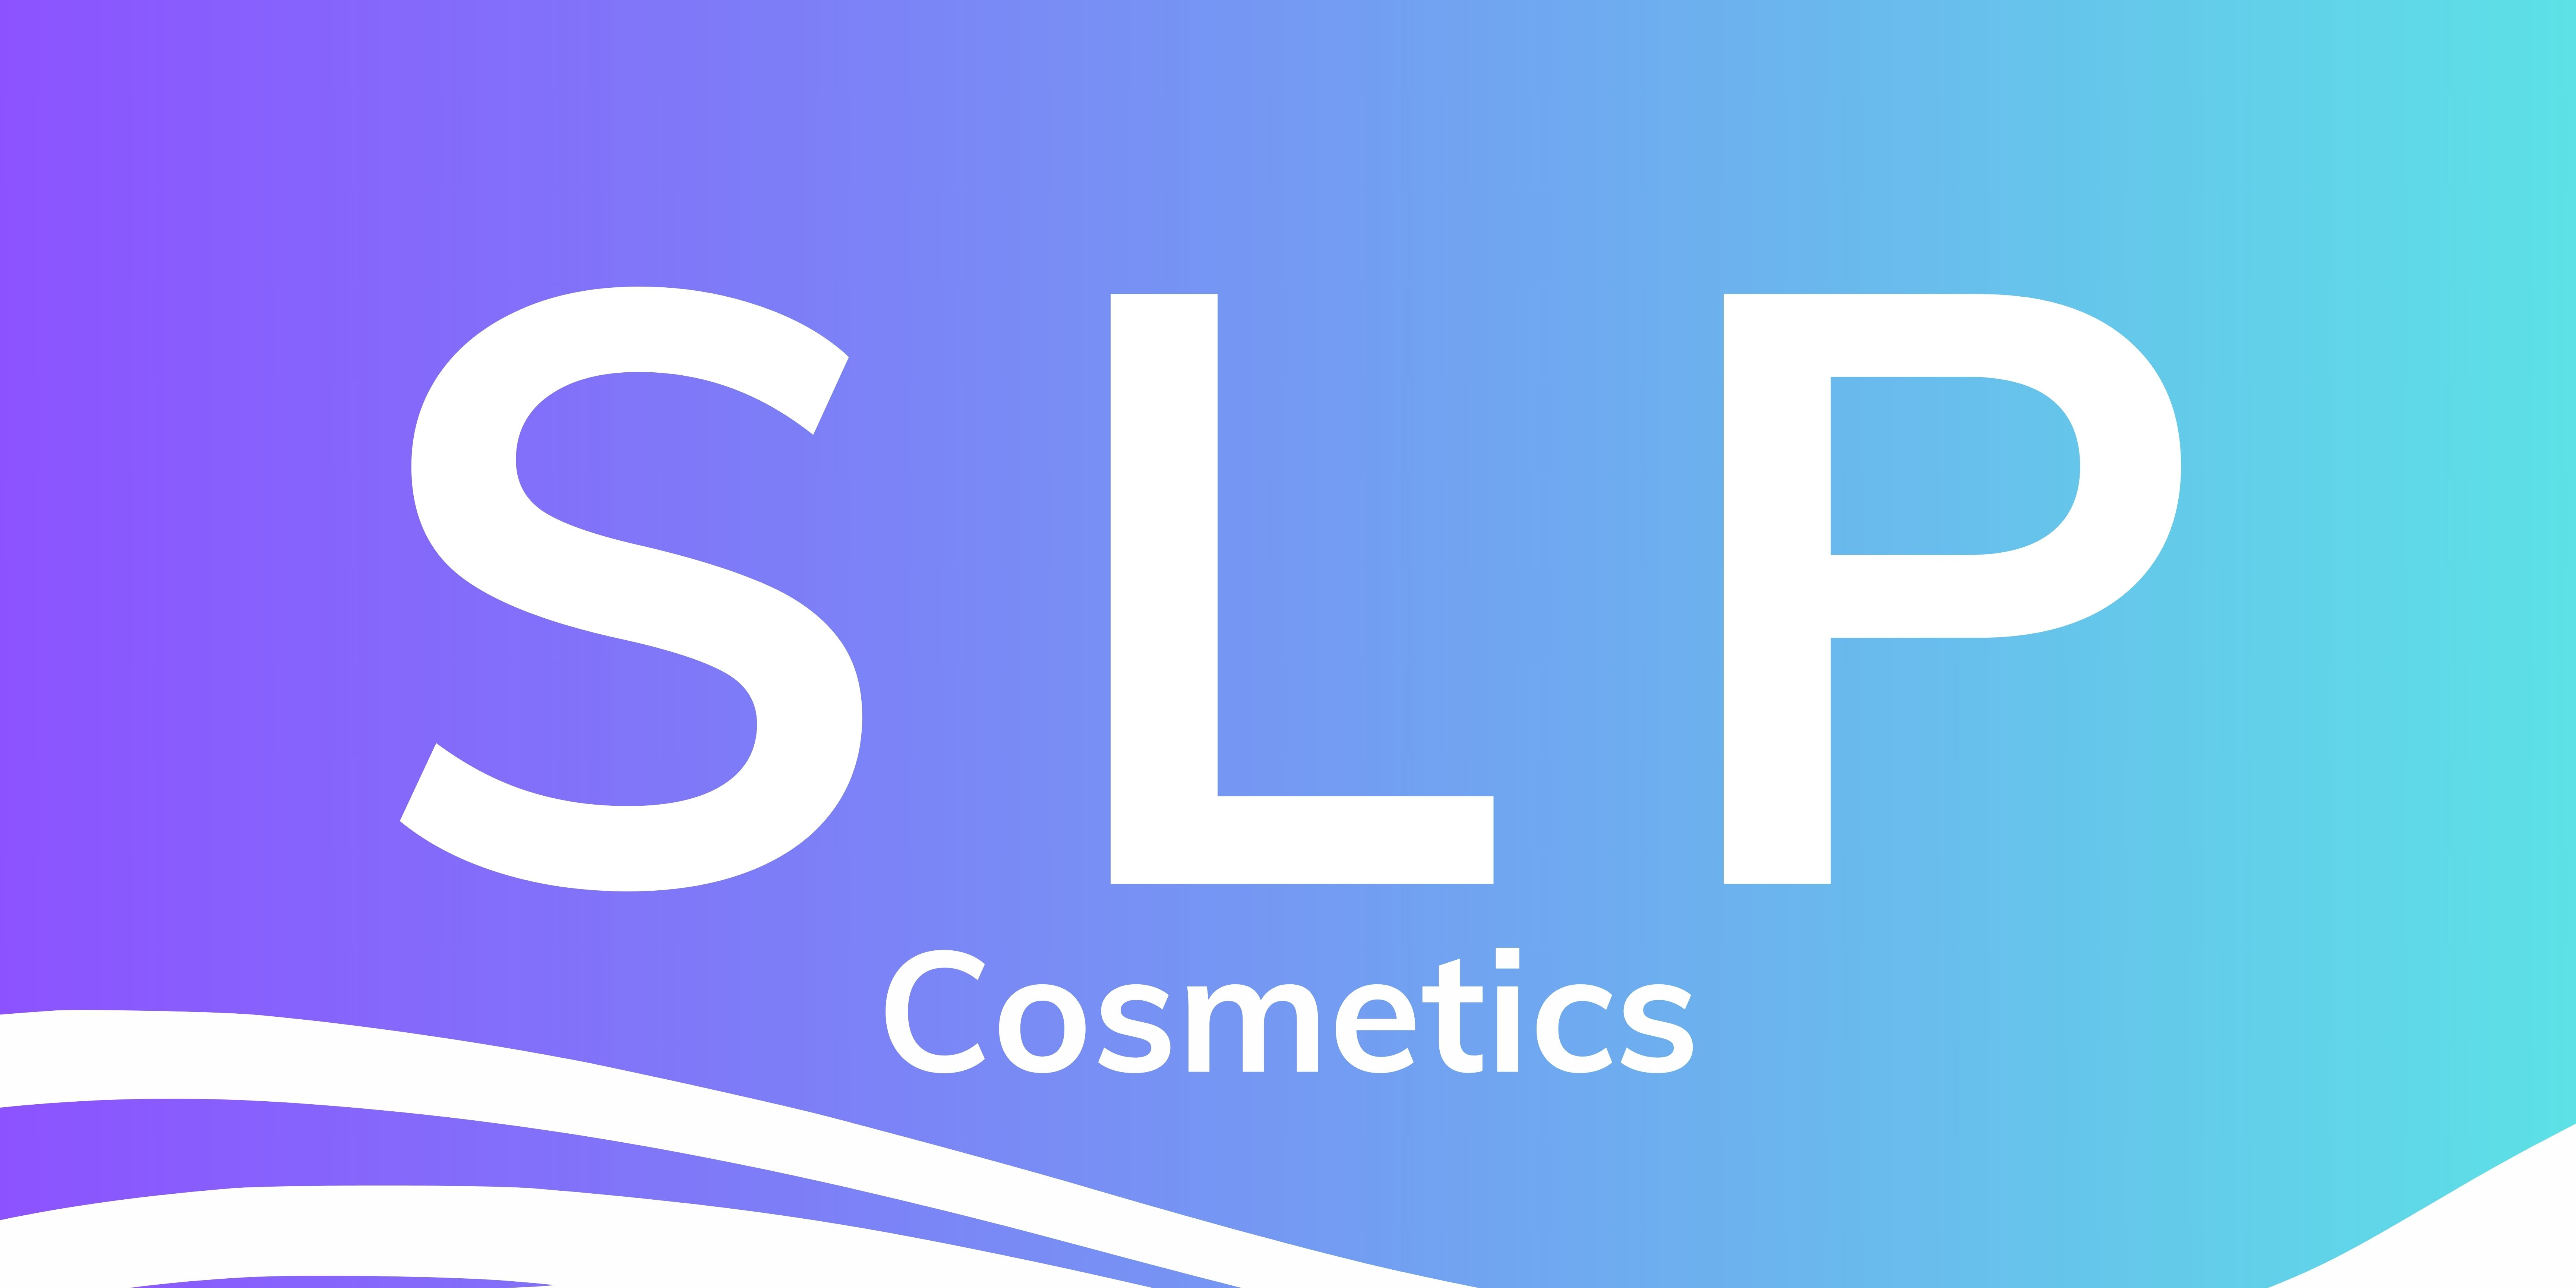 Cosmetics Online Brasil